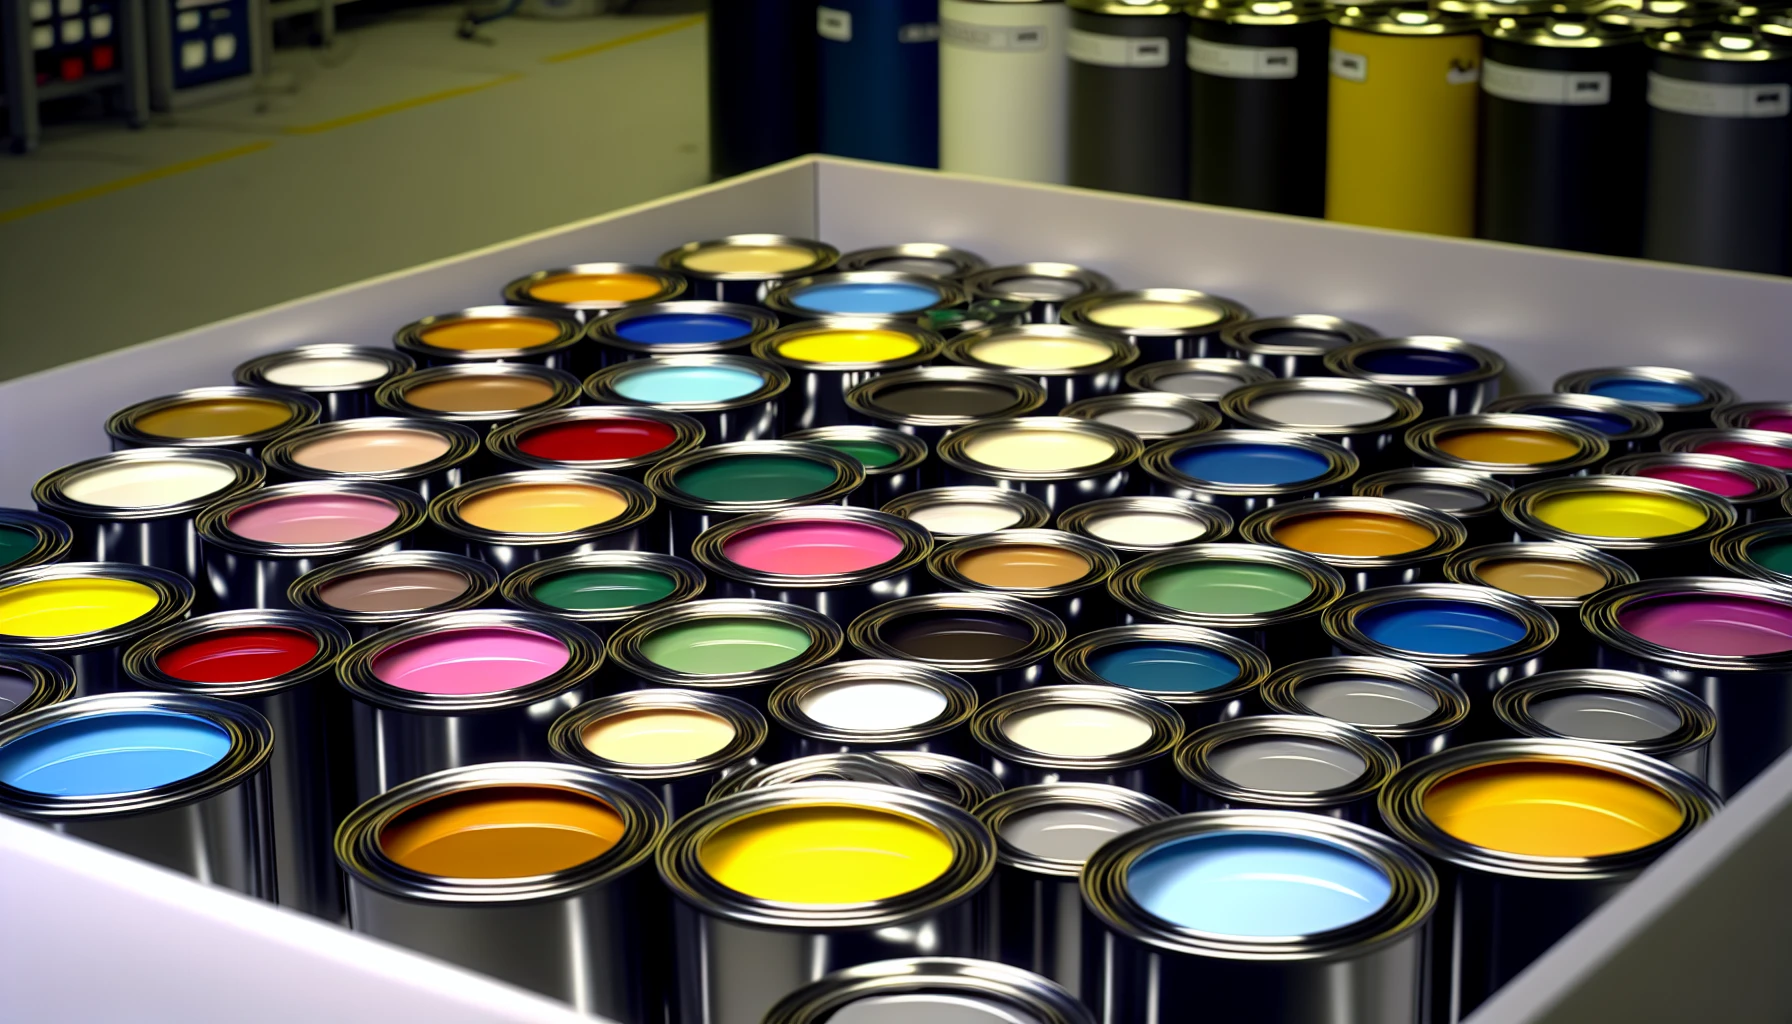 High-quality automotive paint cans